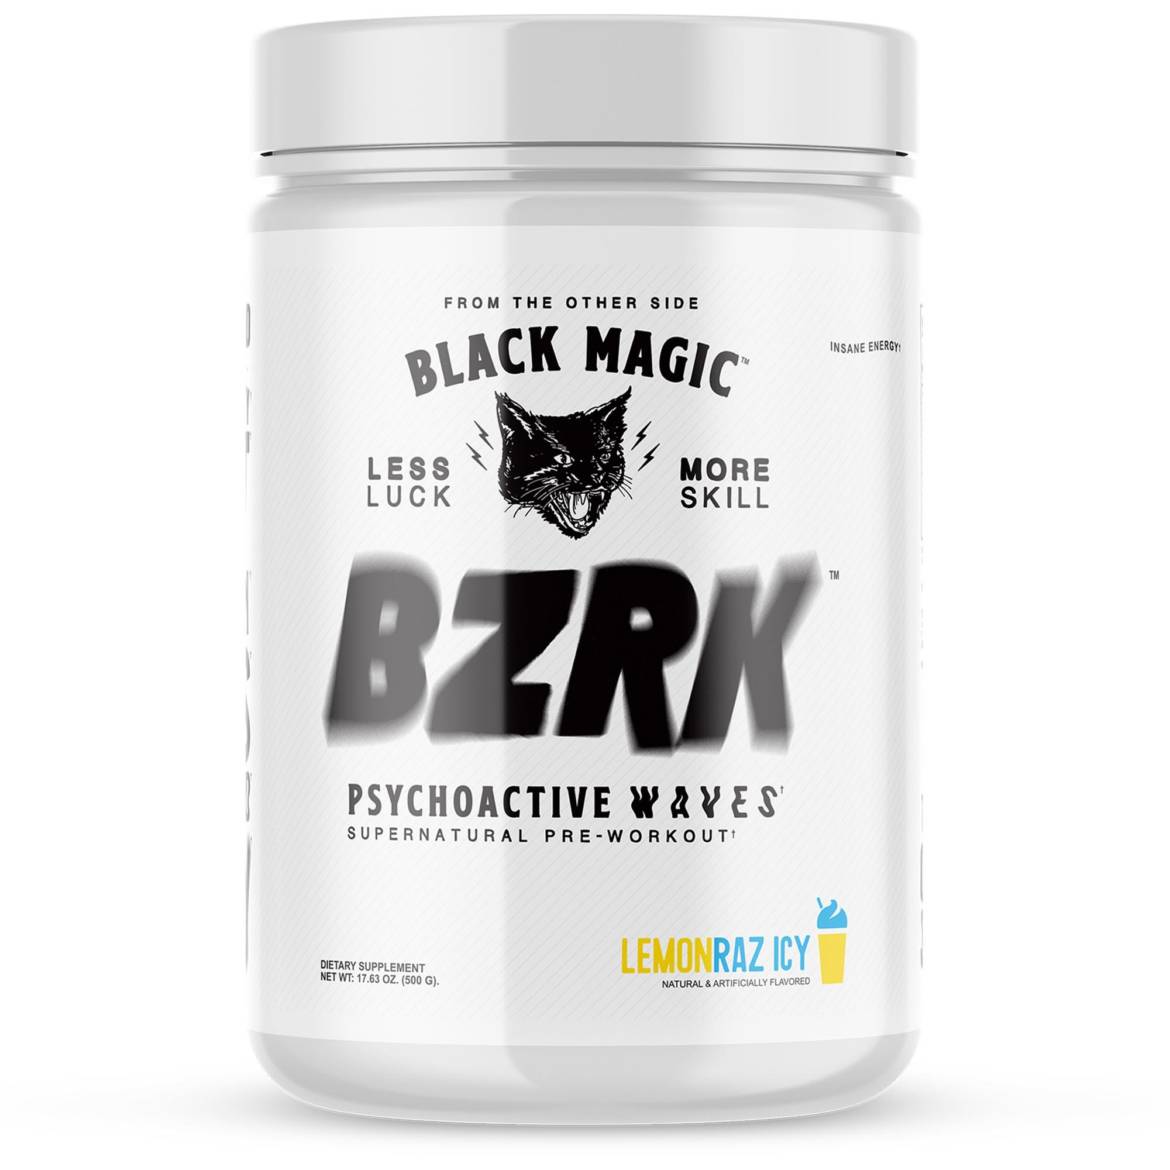 Black_Magic_Product_Renders-BZRK-Lemon_2000x.jpg